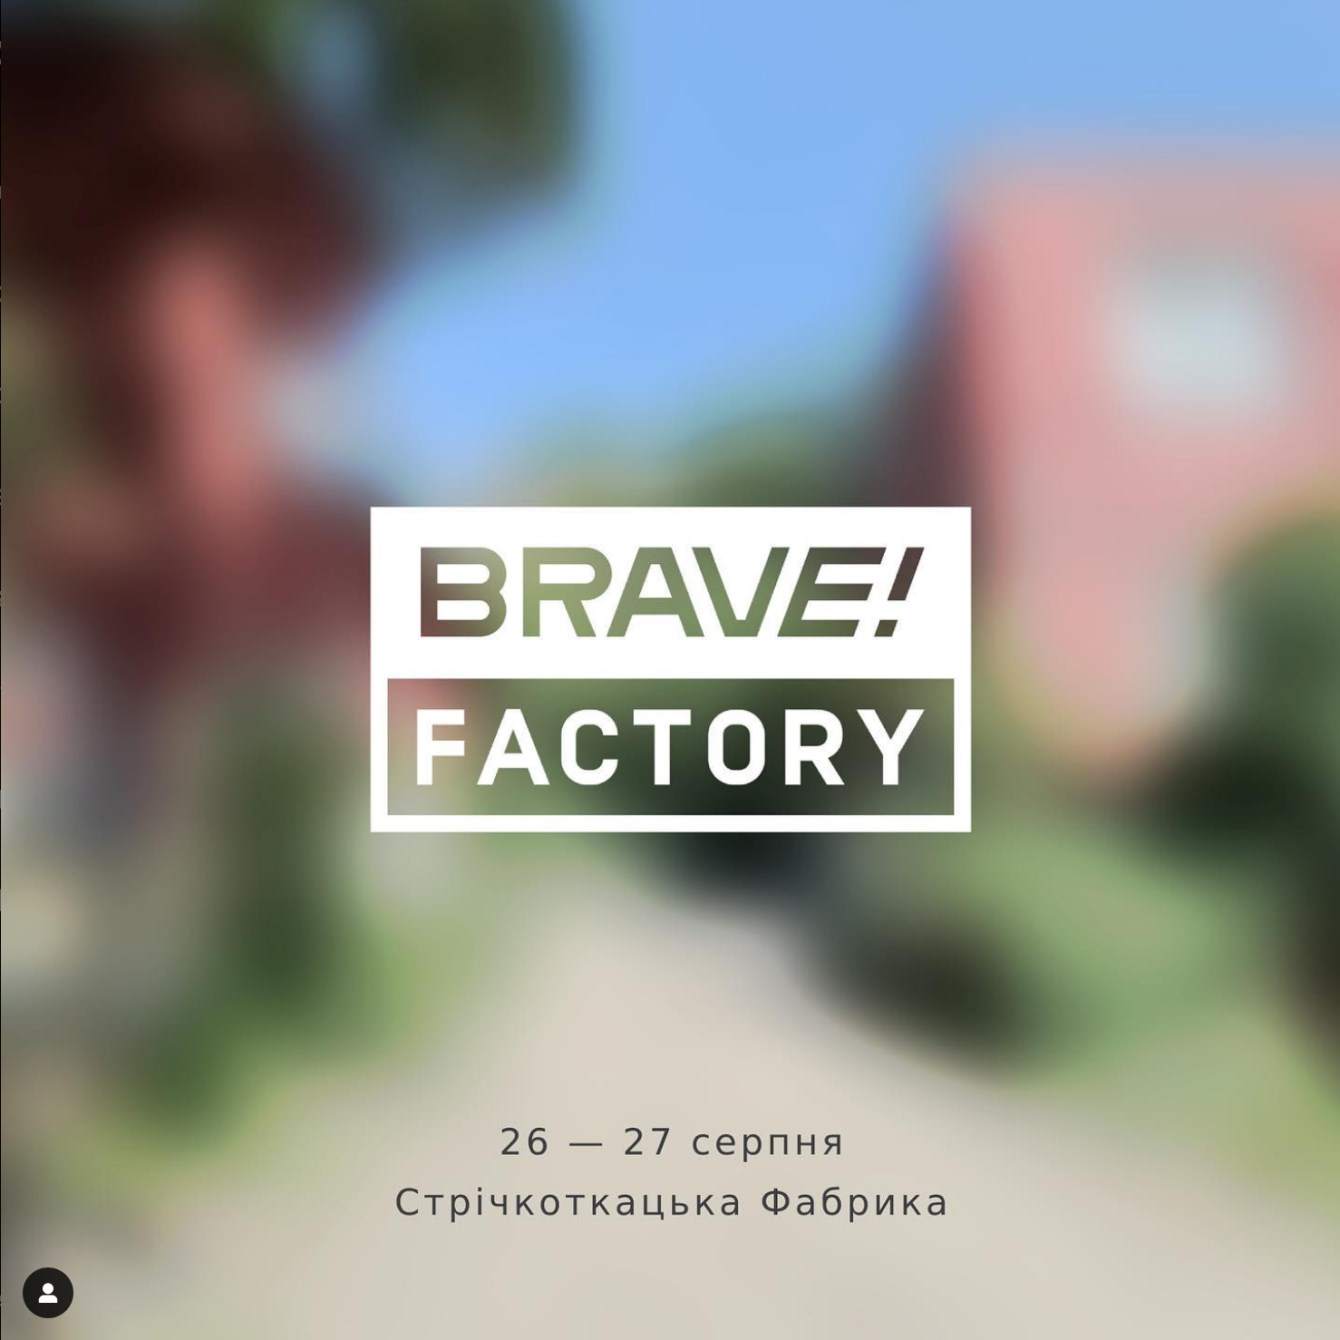 Brave! Factory - フライヤー表